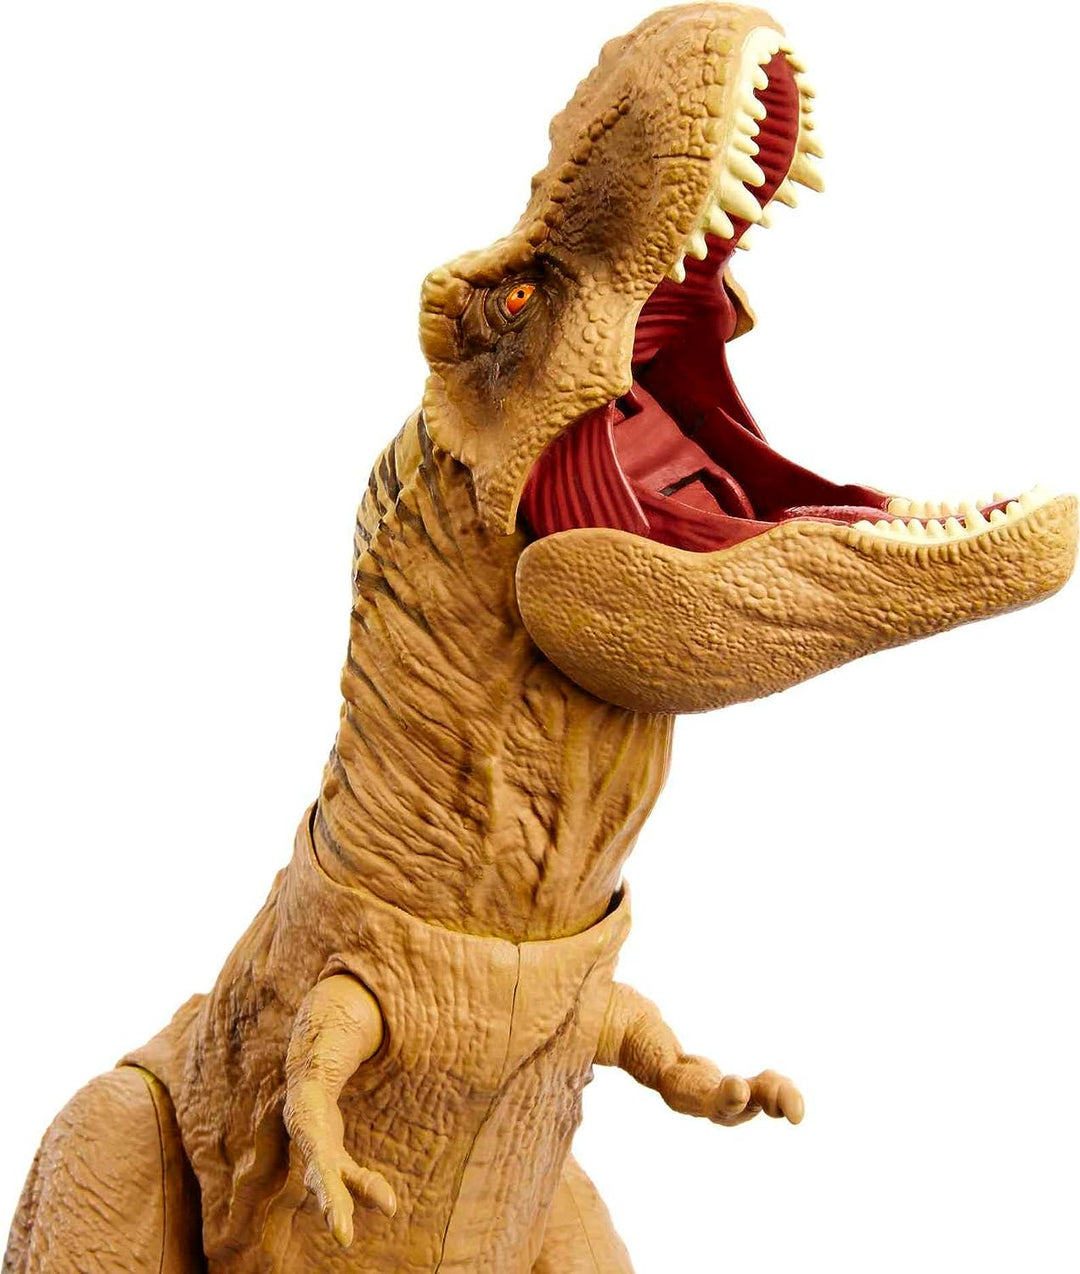 Jurassic World Hunt N' Chomp Tyrannosaurus Rex Dinosaur Toy Figure with Sound